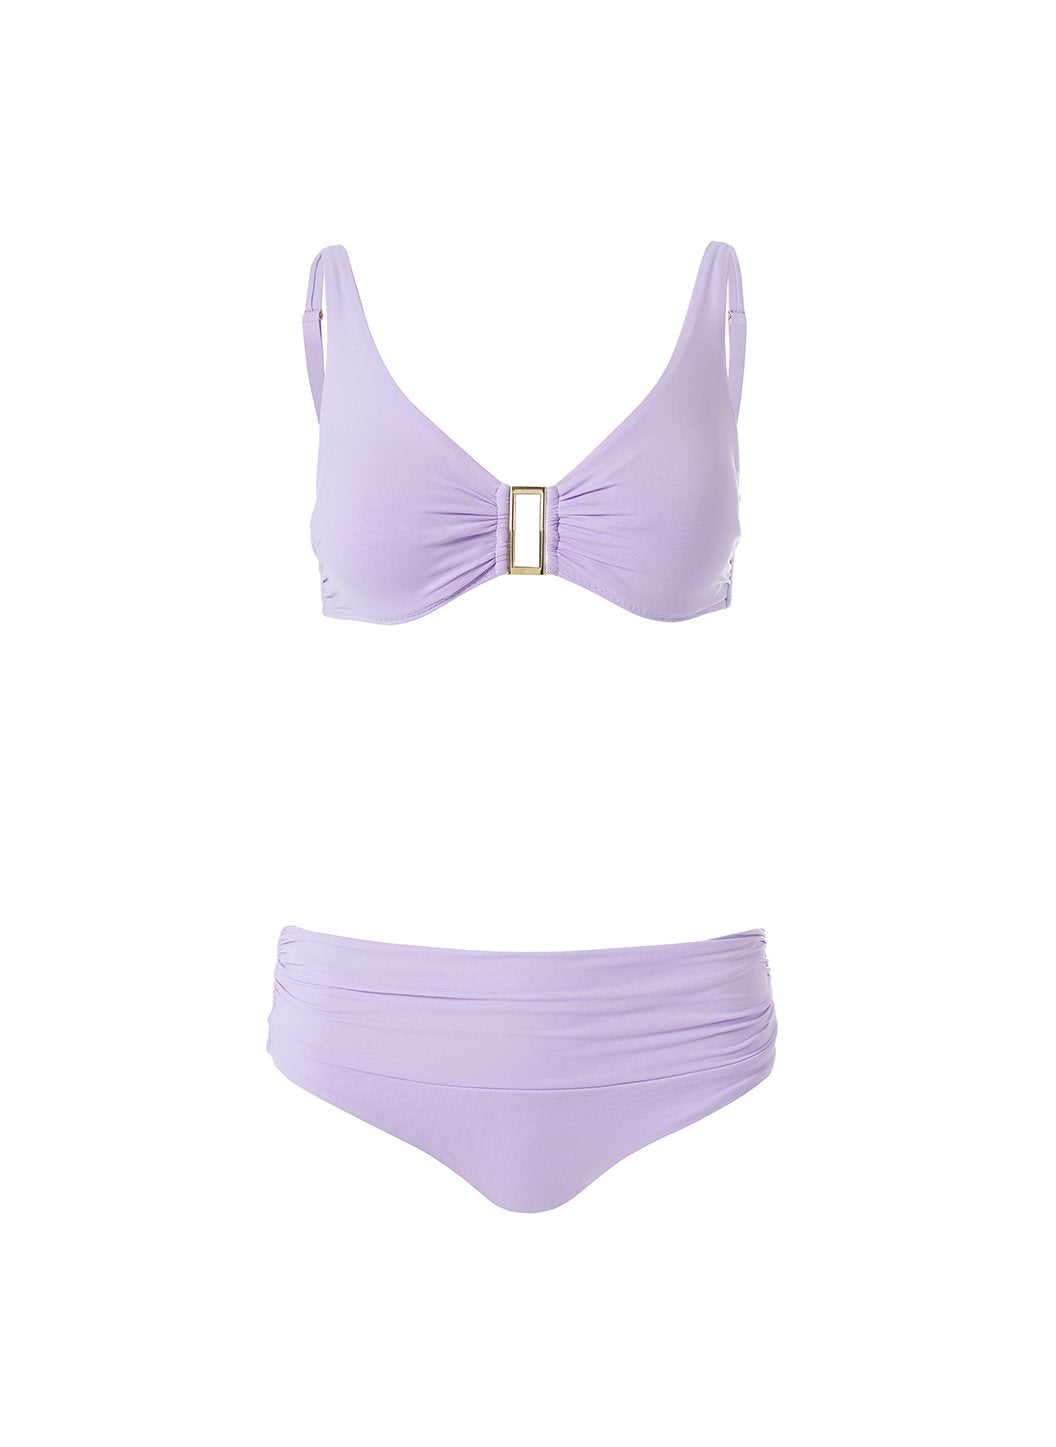 Bel Air Lilac Bikini Cutout 